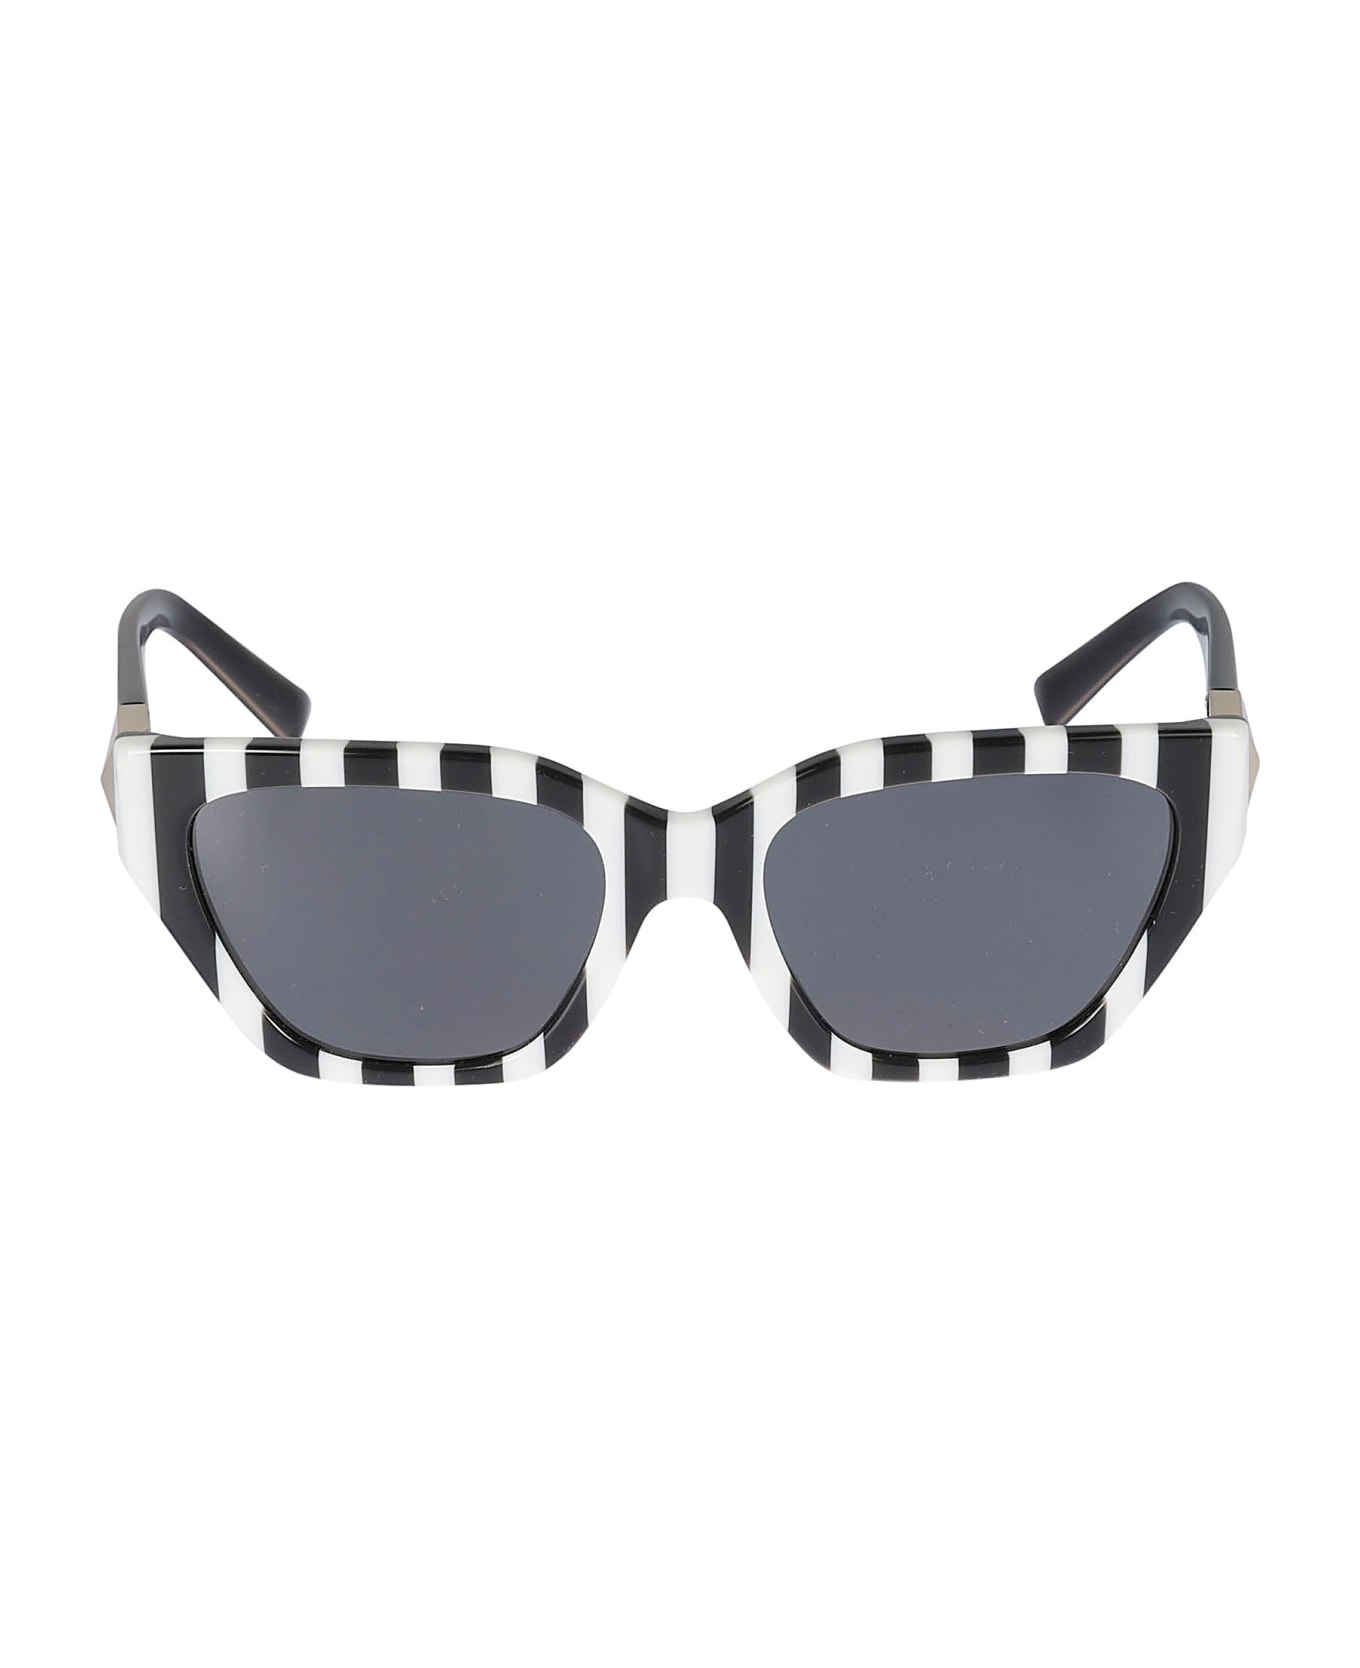 Valentino Eyewear Sole518187 textured Sunglasses - N/A